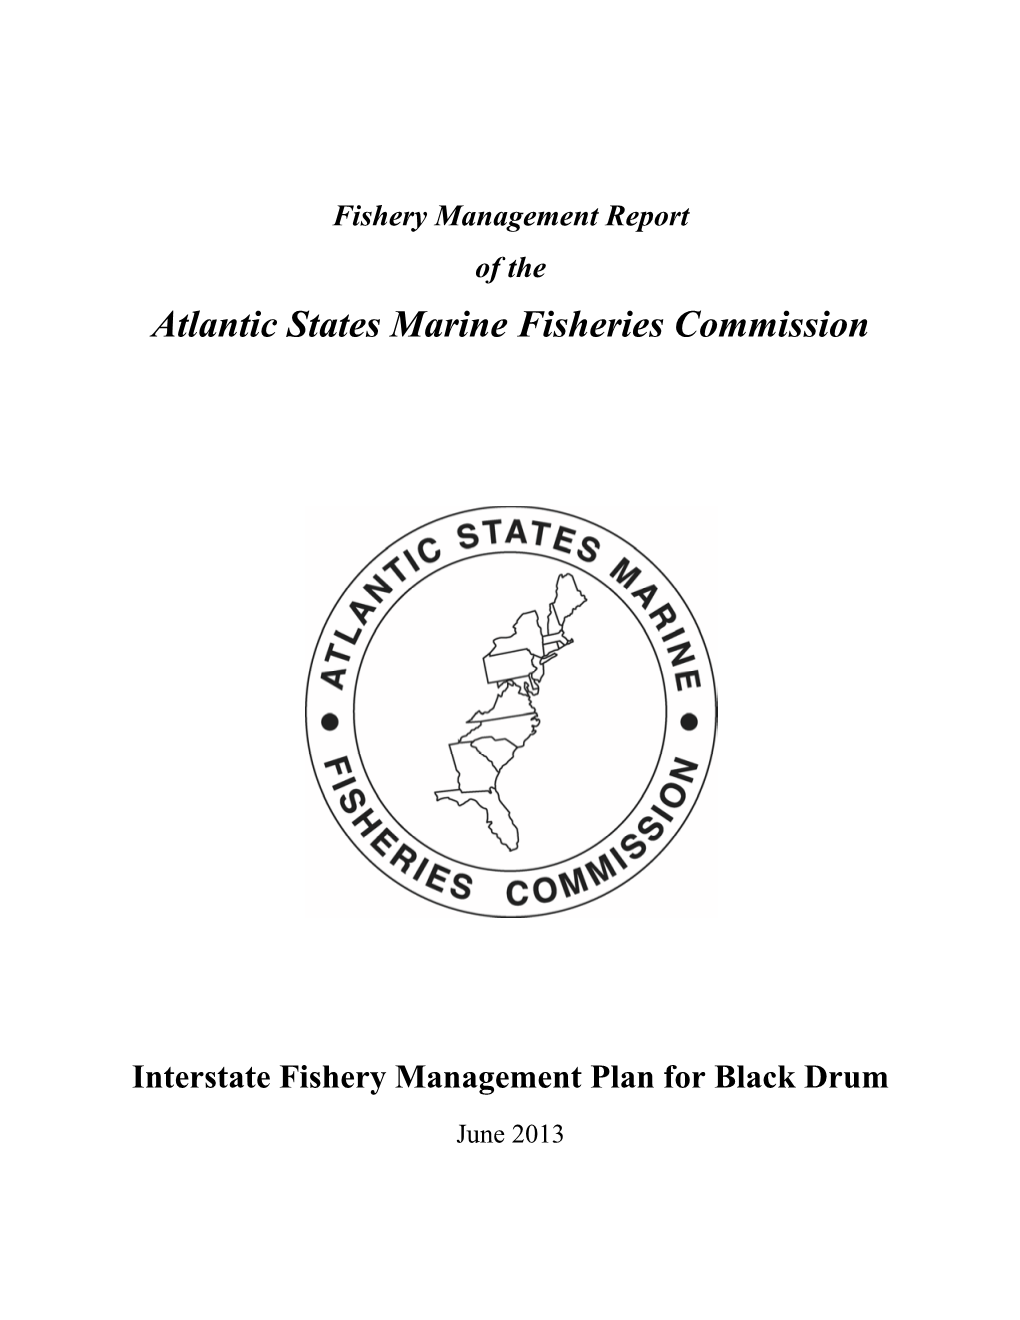 Interstate Fishery Management Plan for Black Drum